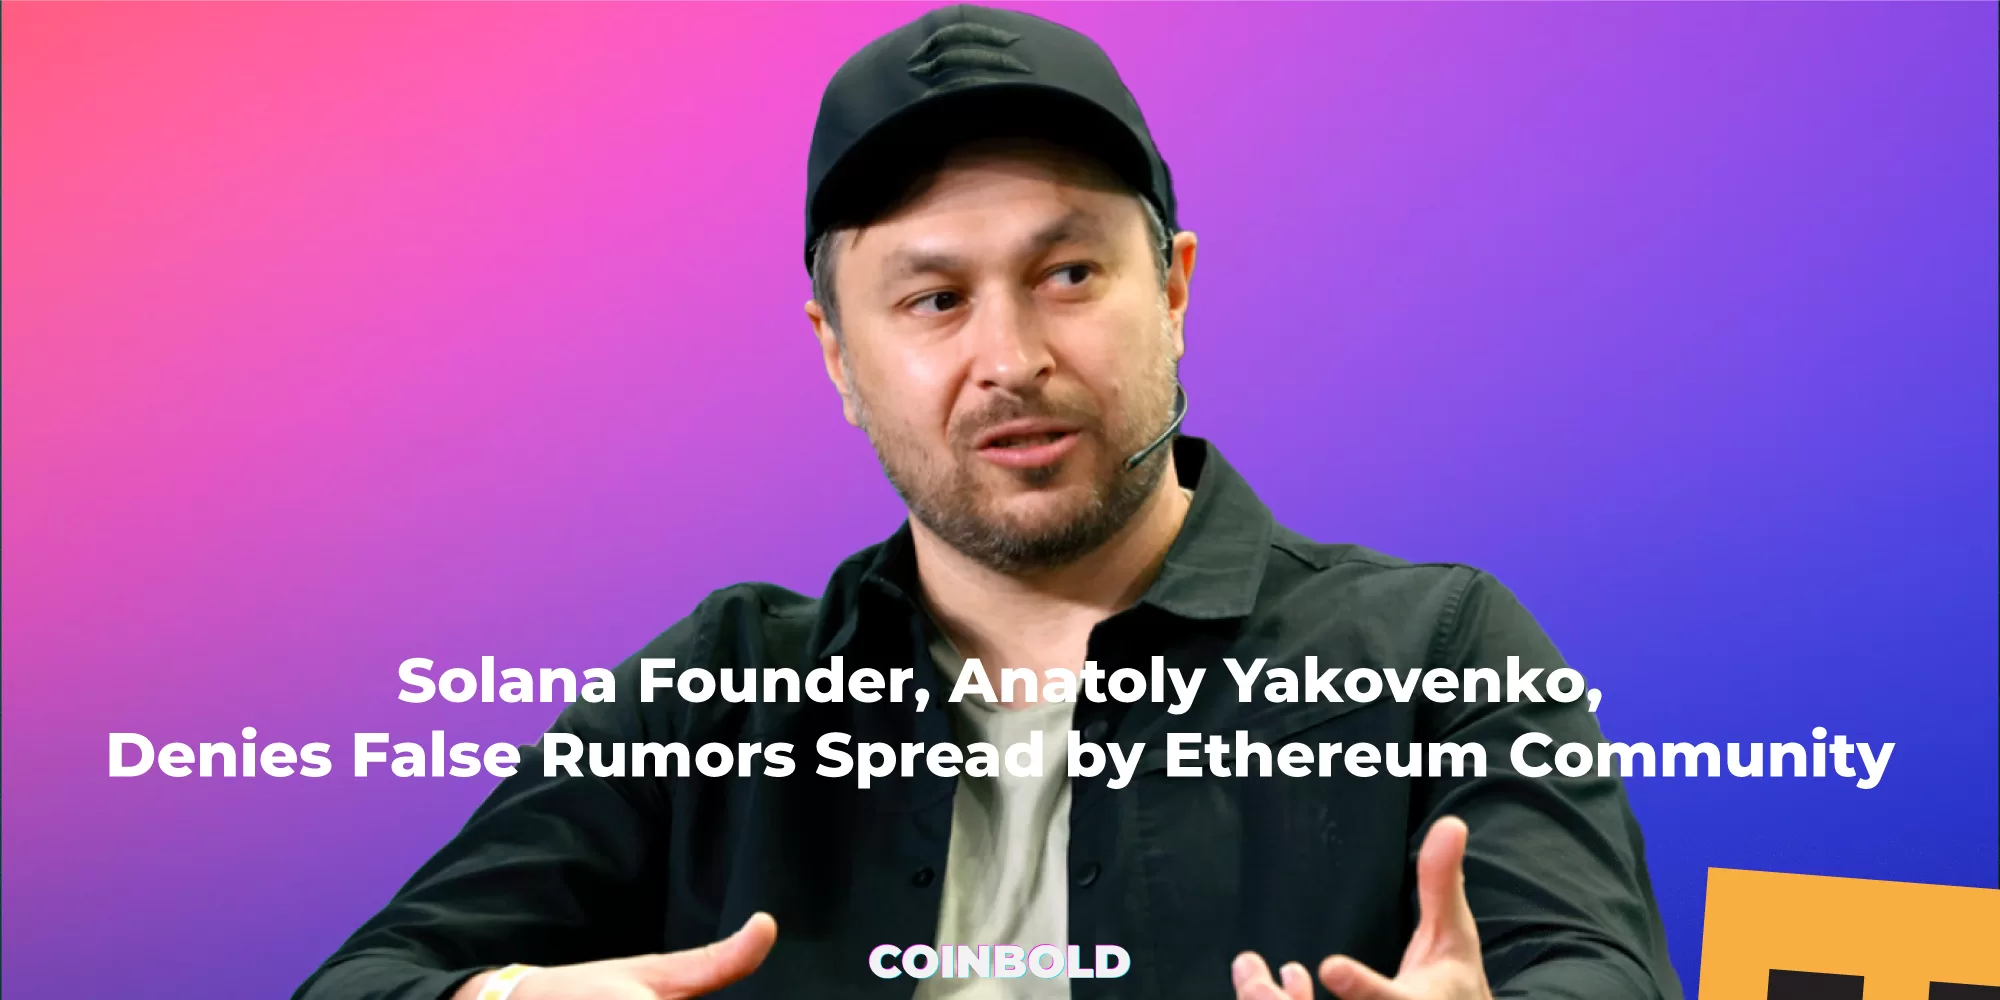 Solana Founder, Anatoly Yakovenko, Denies False Rumors Spread by Ethereum Community